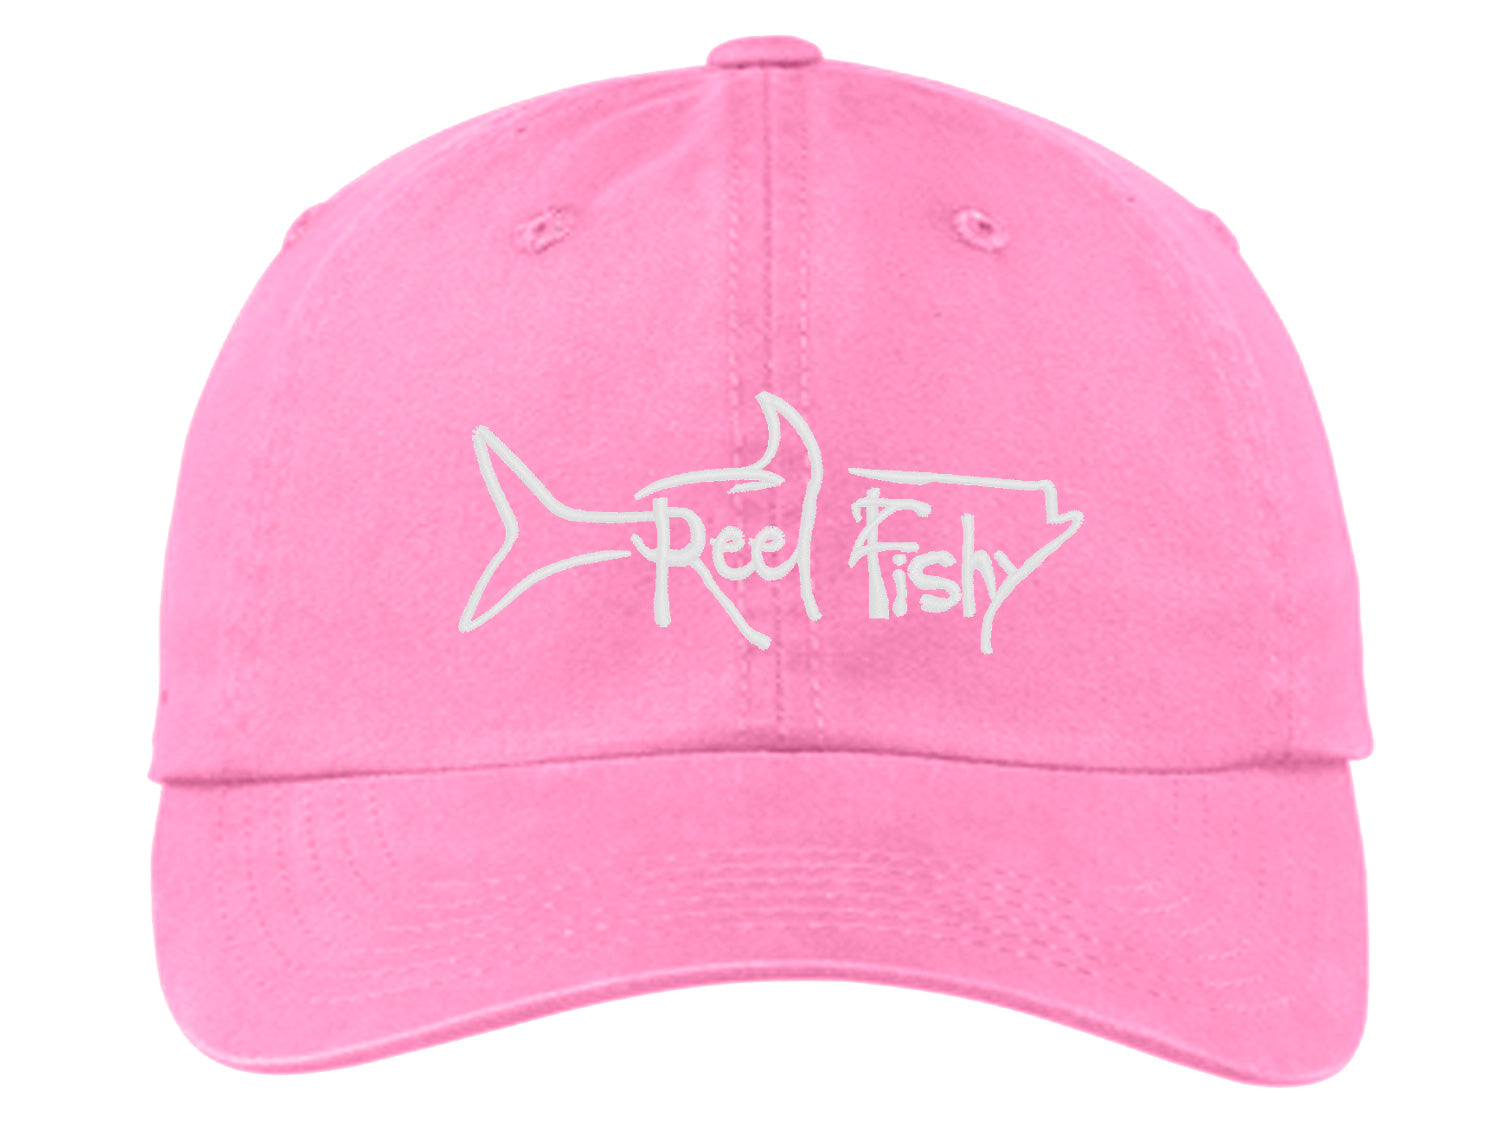 Pink Unstructured Dad Hat with White Reel Fishy Tarpon Logo